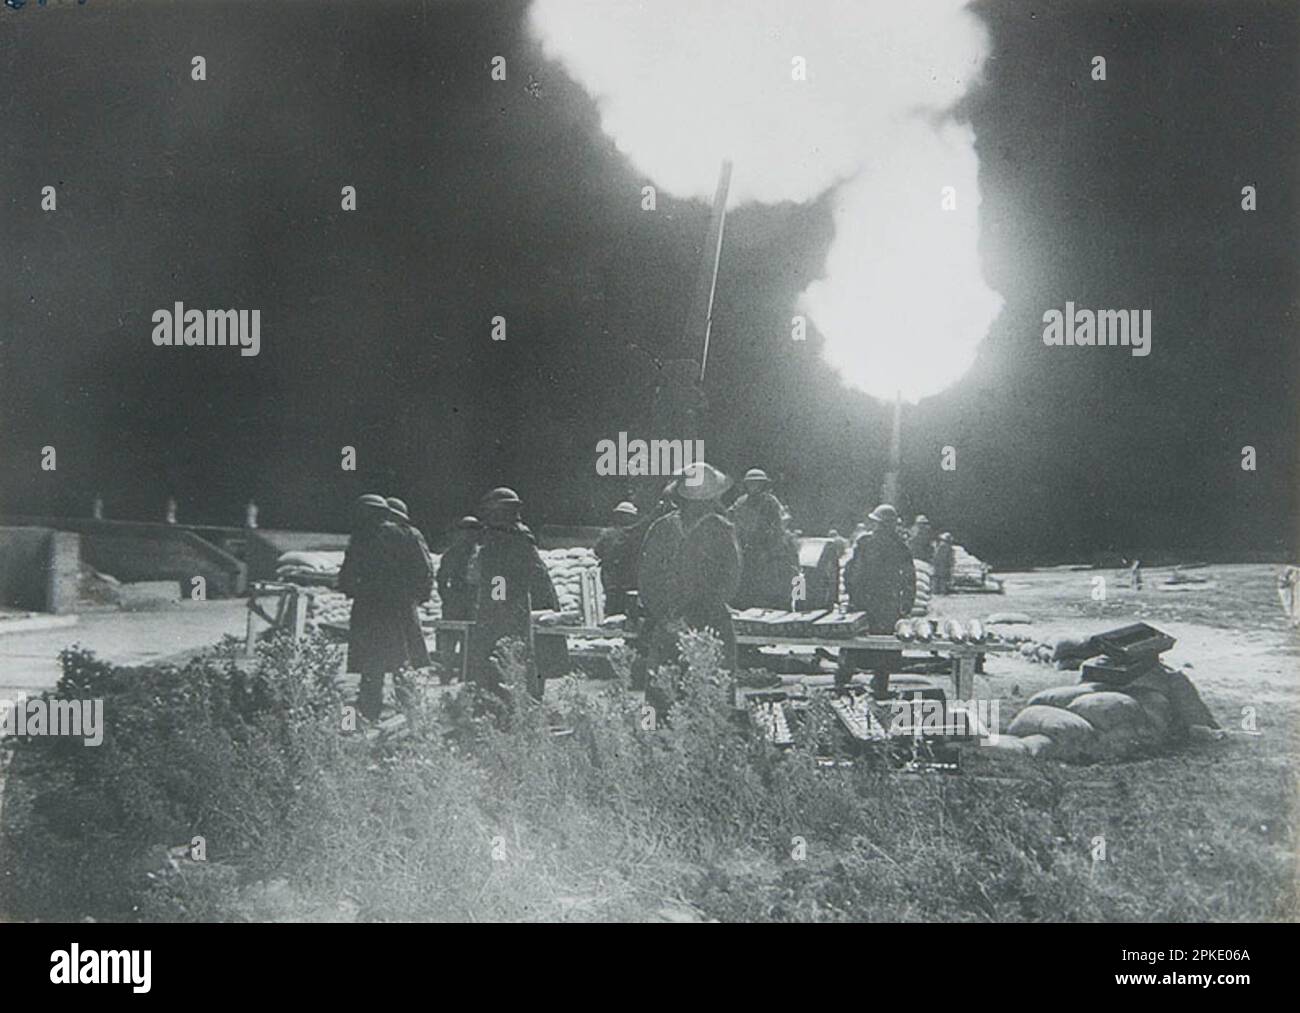 Unidentified WW2 army image - night time firing Stock Photo